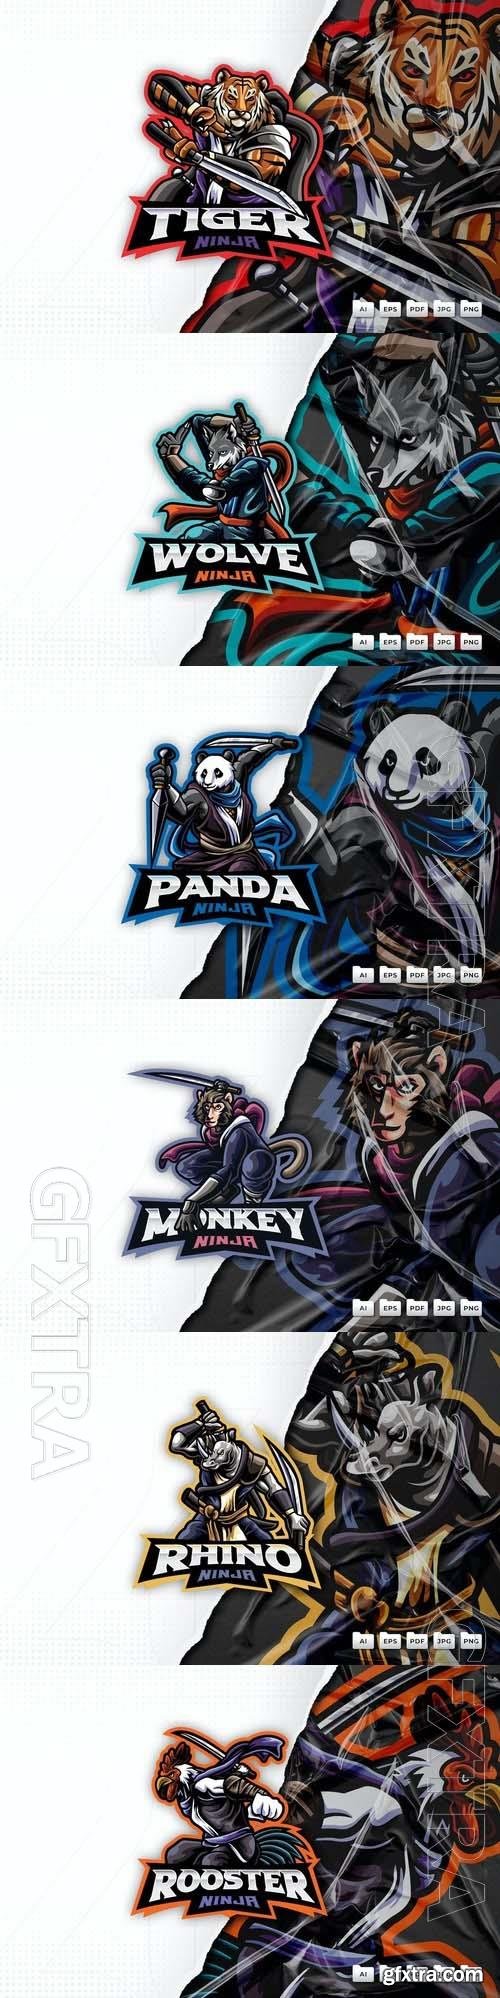 Tiger, chicken, monkey, panda, rhino, wolf ninja mascot logo design